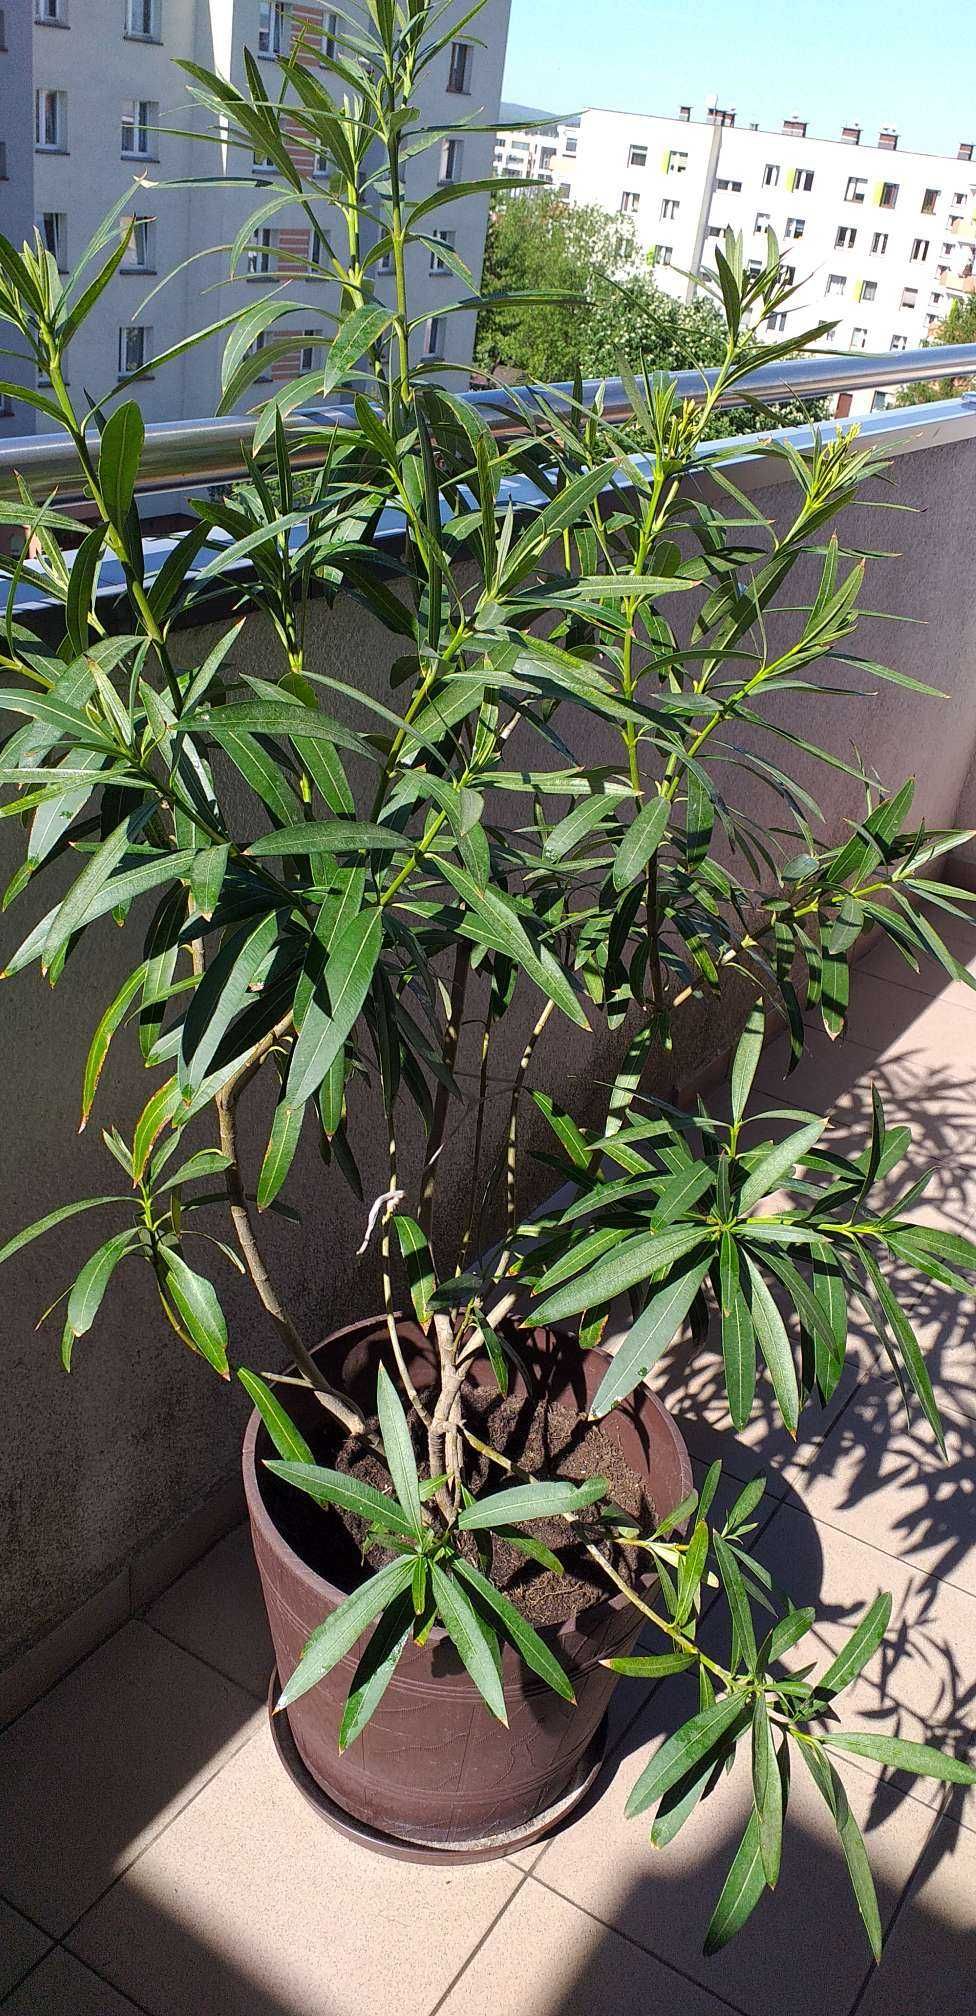 oleander pospolity bialy,1,70-2,00m